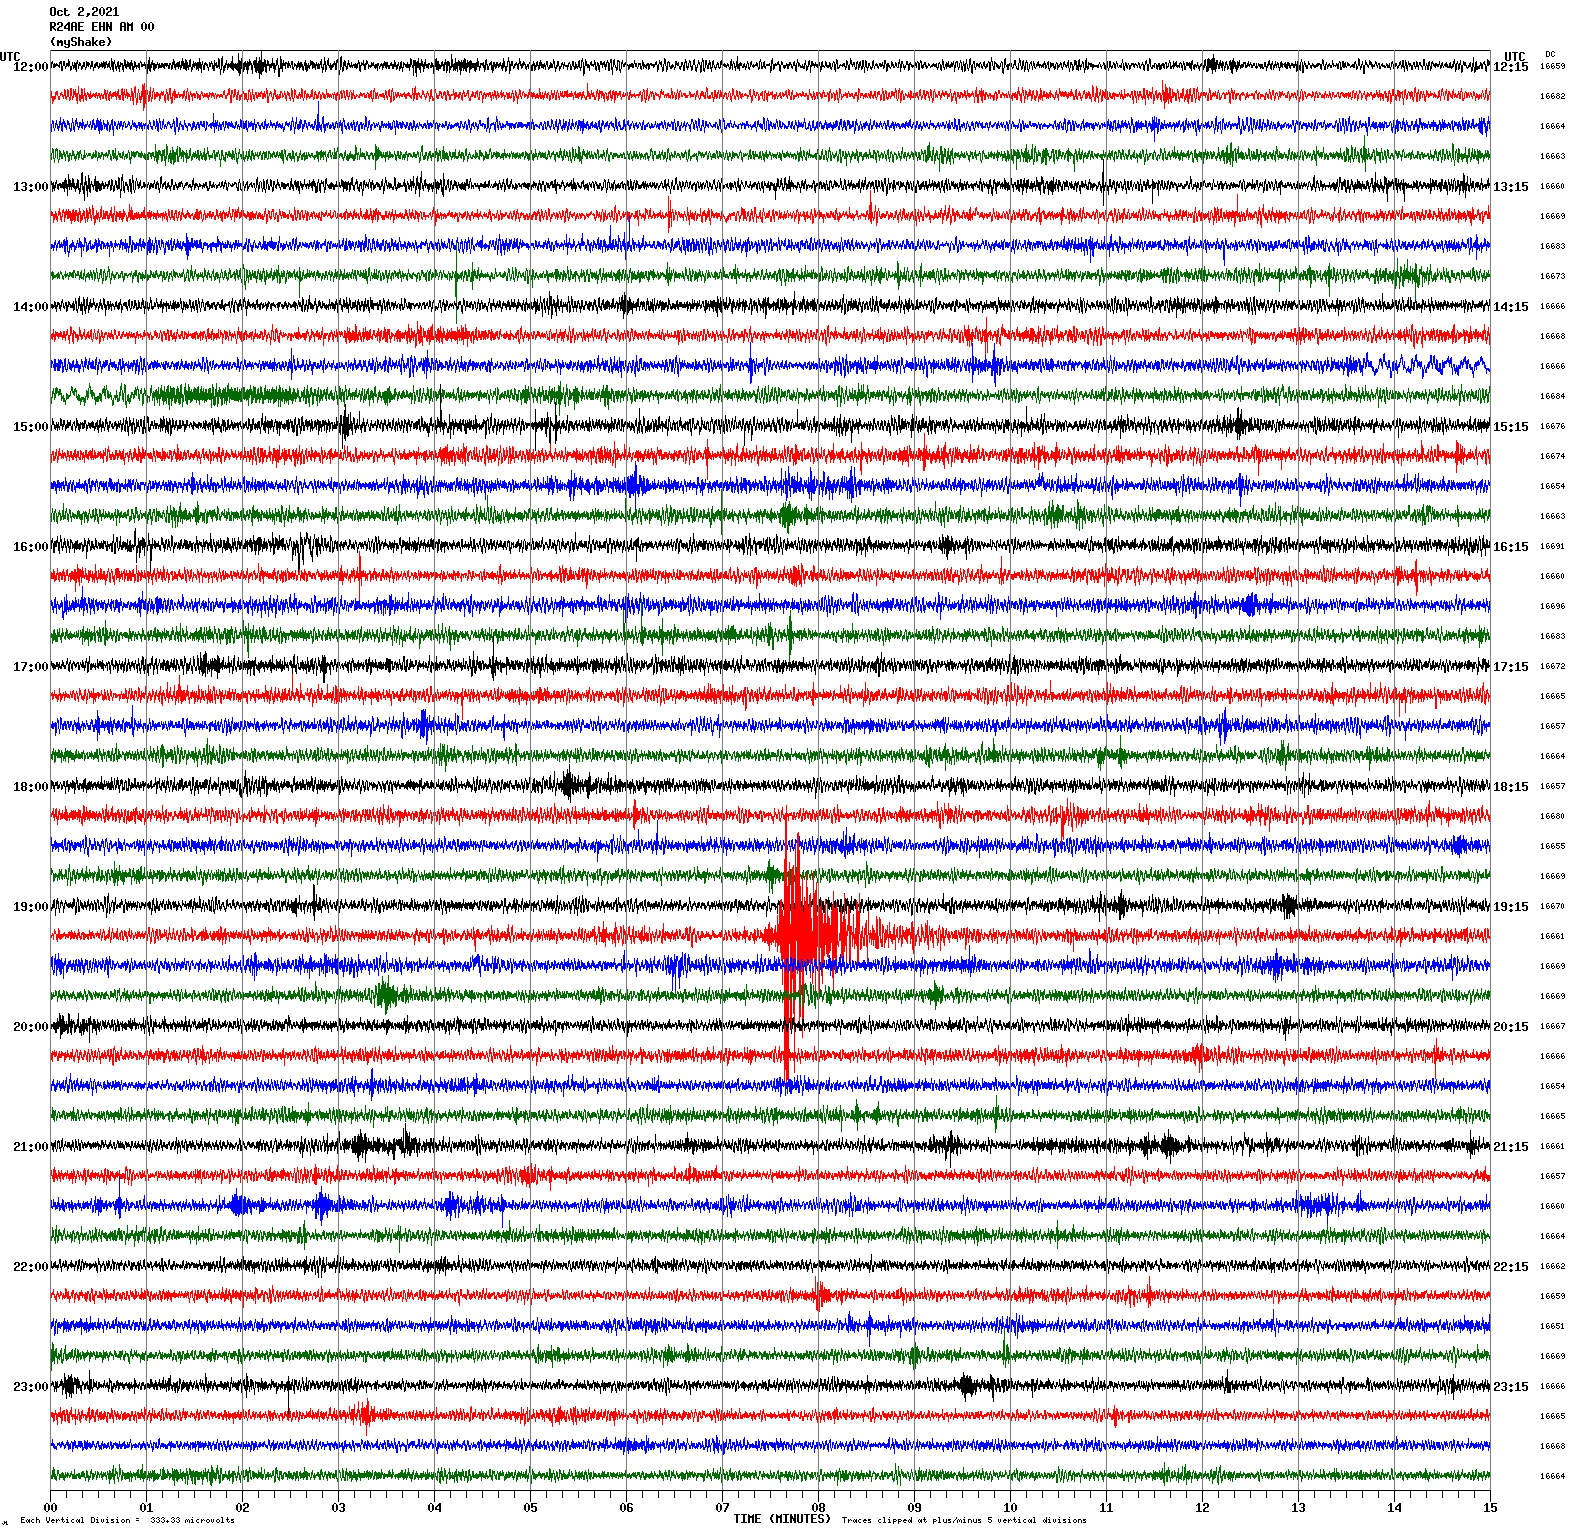 /seismic-data/R24AE/R24AE_EHN_AM_00.2021100212.gif